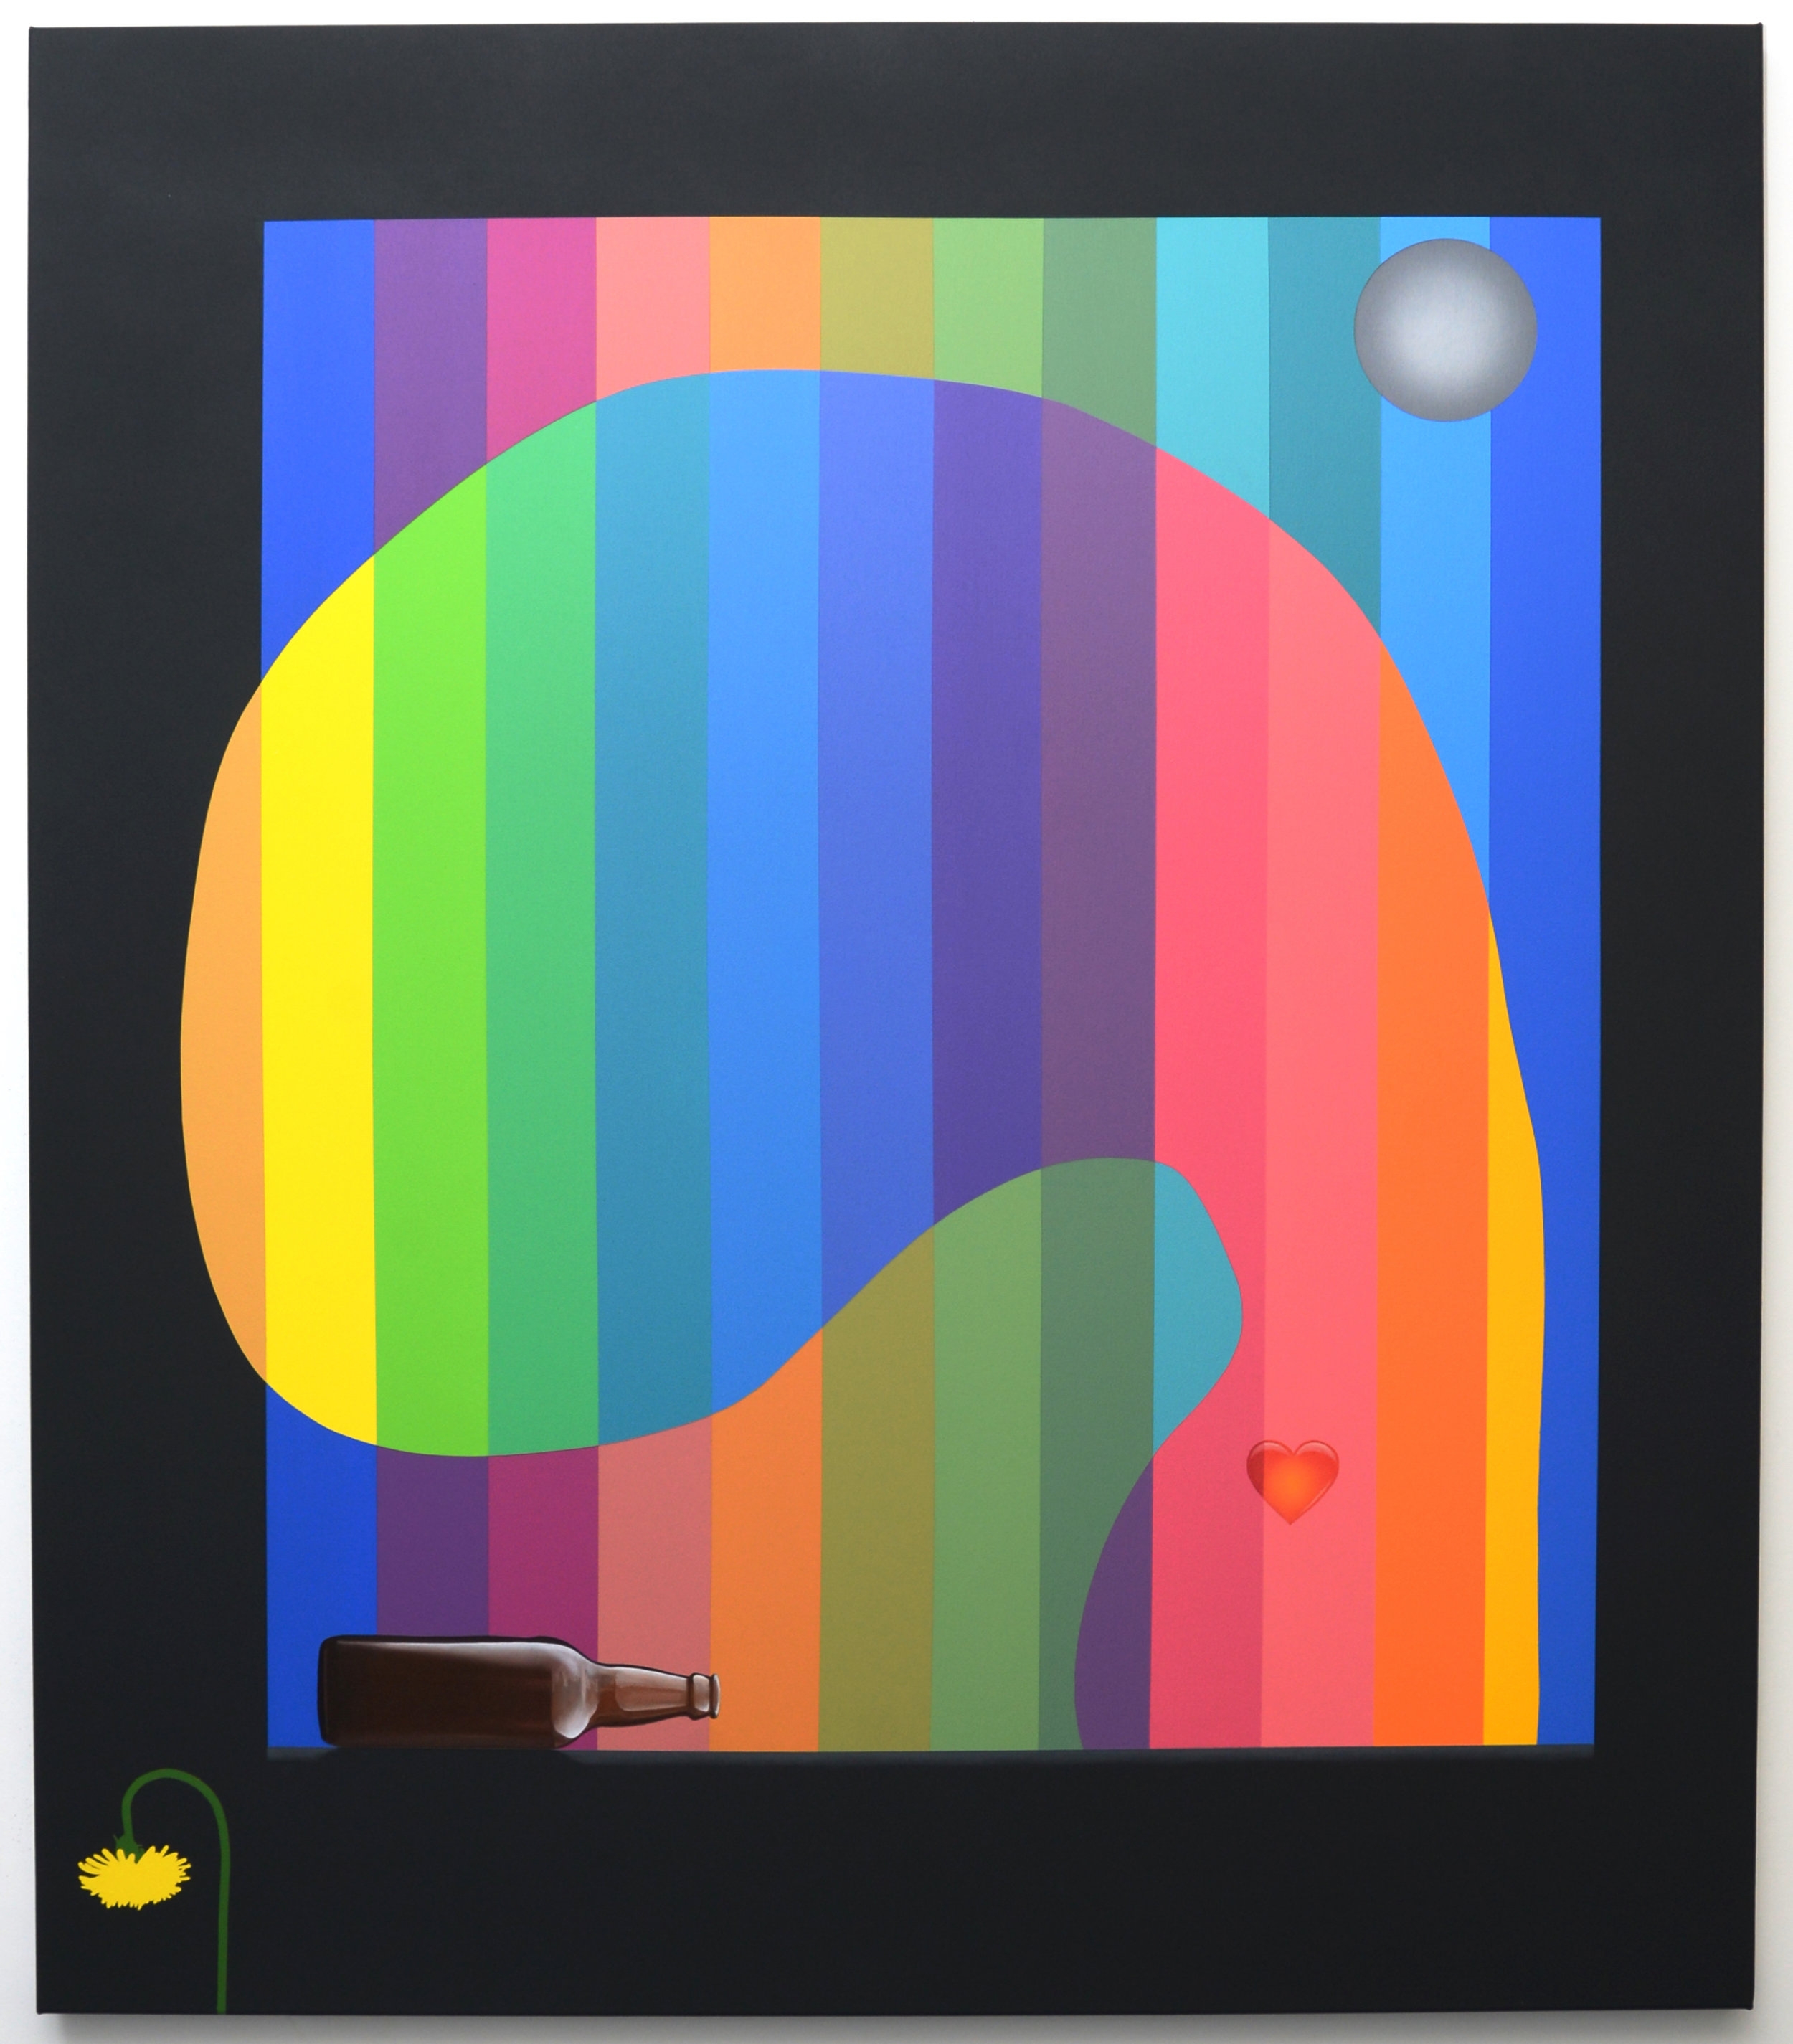 'Social Chameleon' (Homage to Ellsworth Kelly), 2018, oil acrylic and spray paint on canvas, 130cm x 150cm